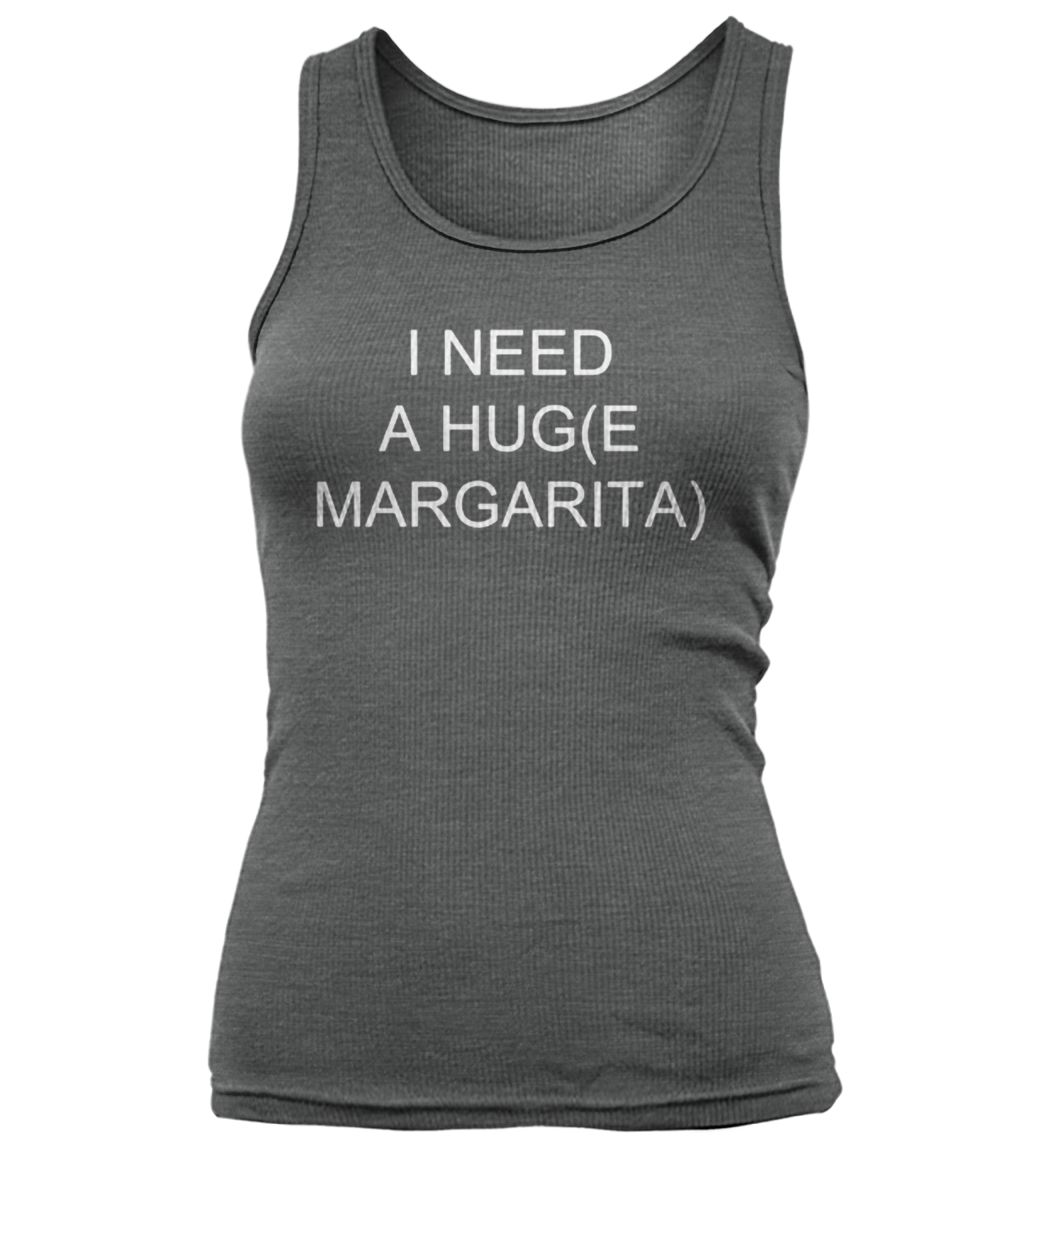 I need a huge margarita women's tank top